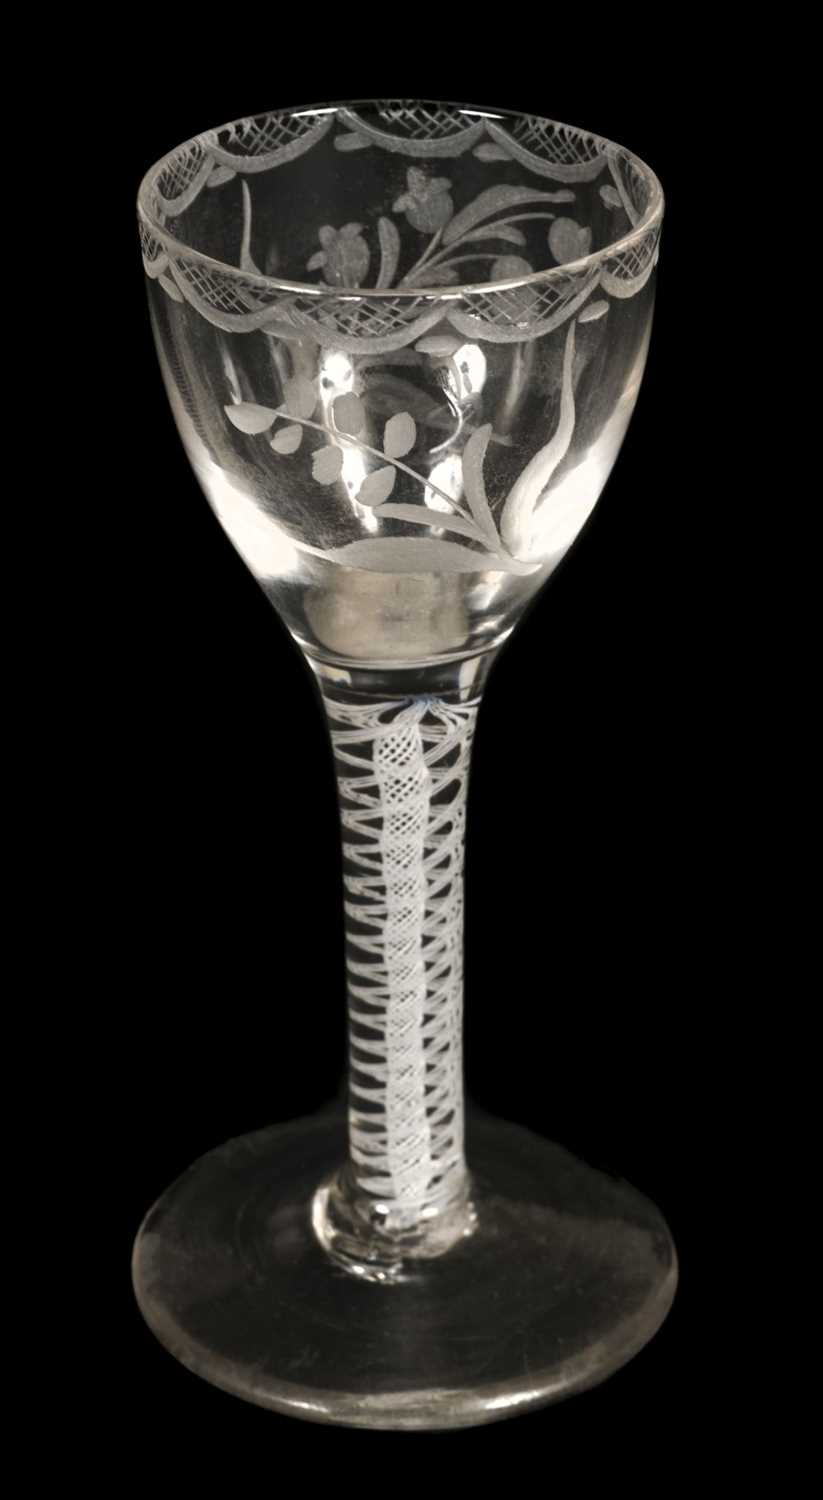 Lot 287 - Drinking Glass. An 18th-century cotton air twist glass